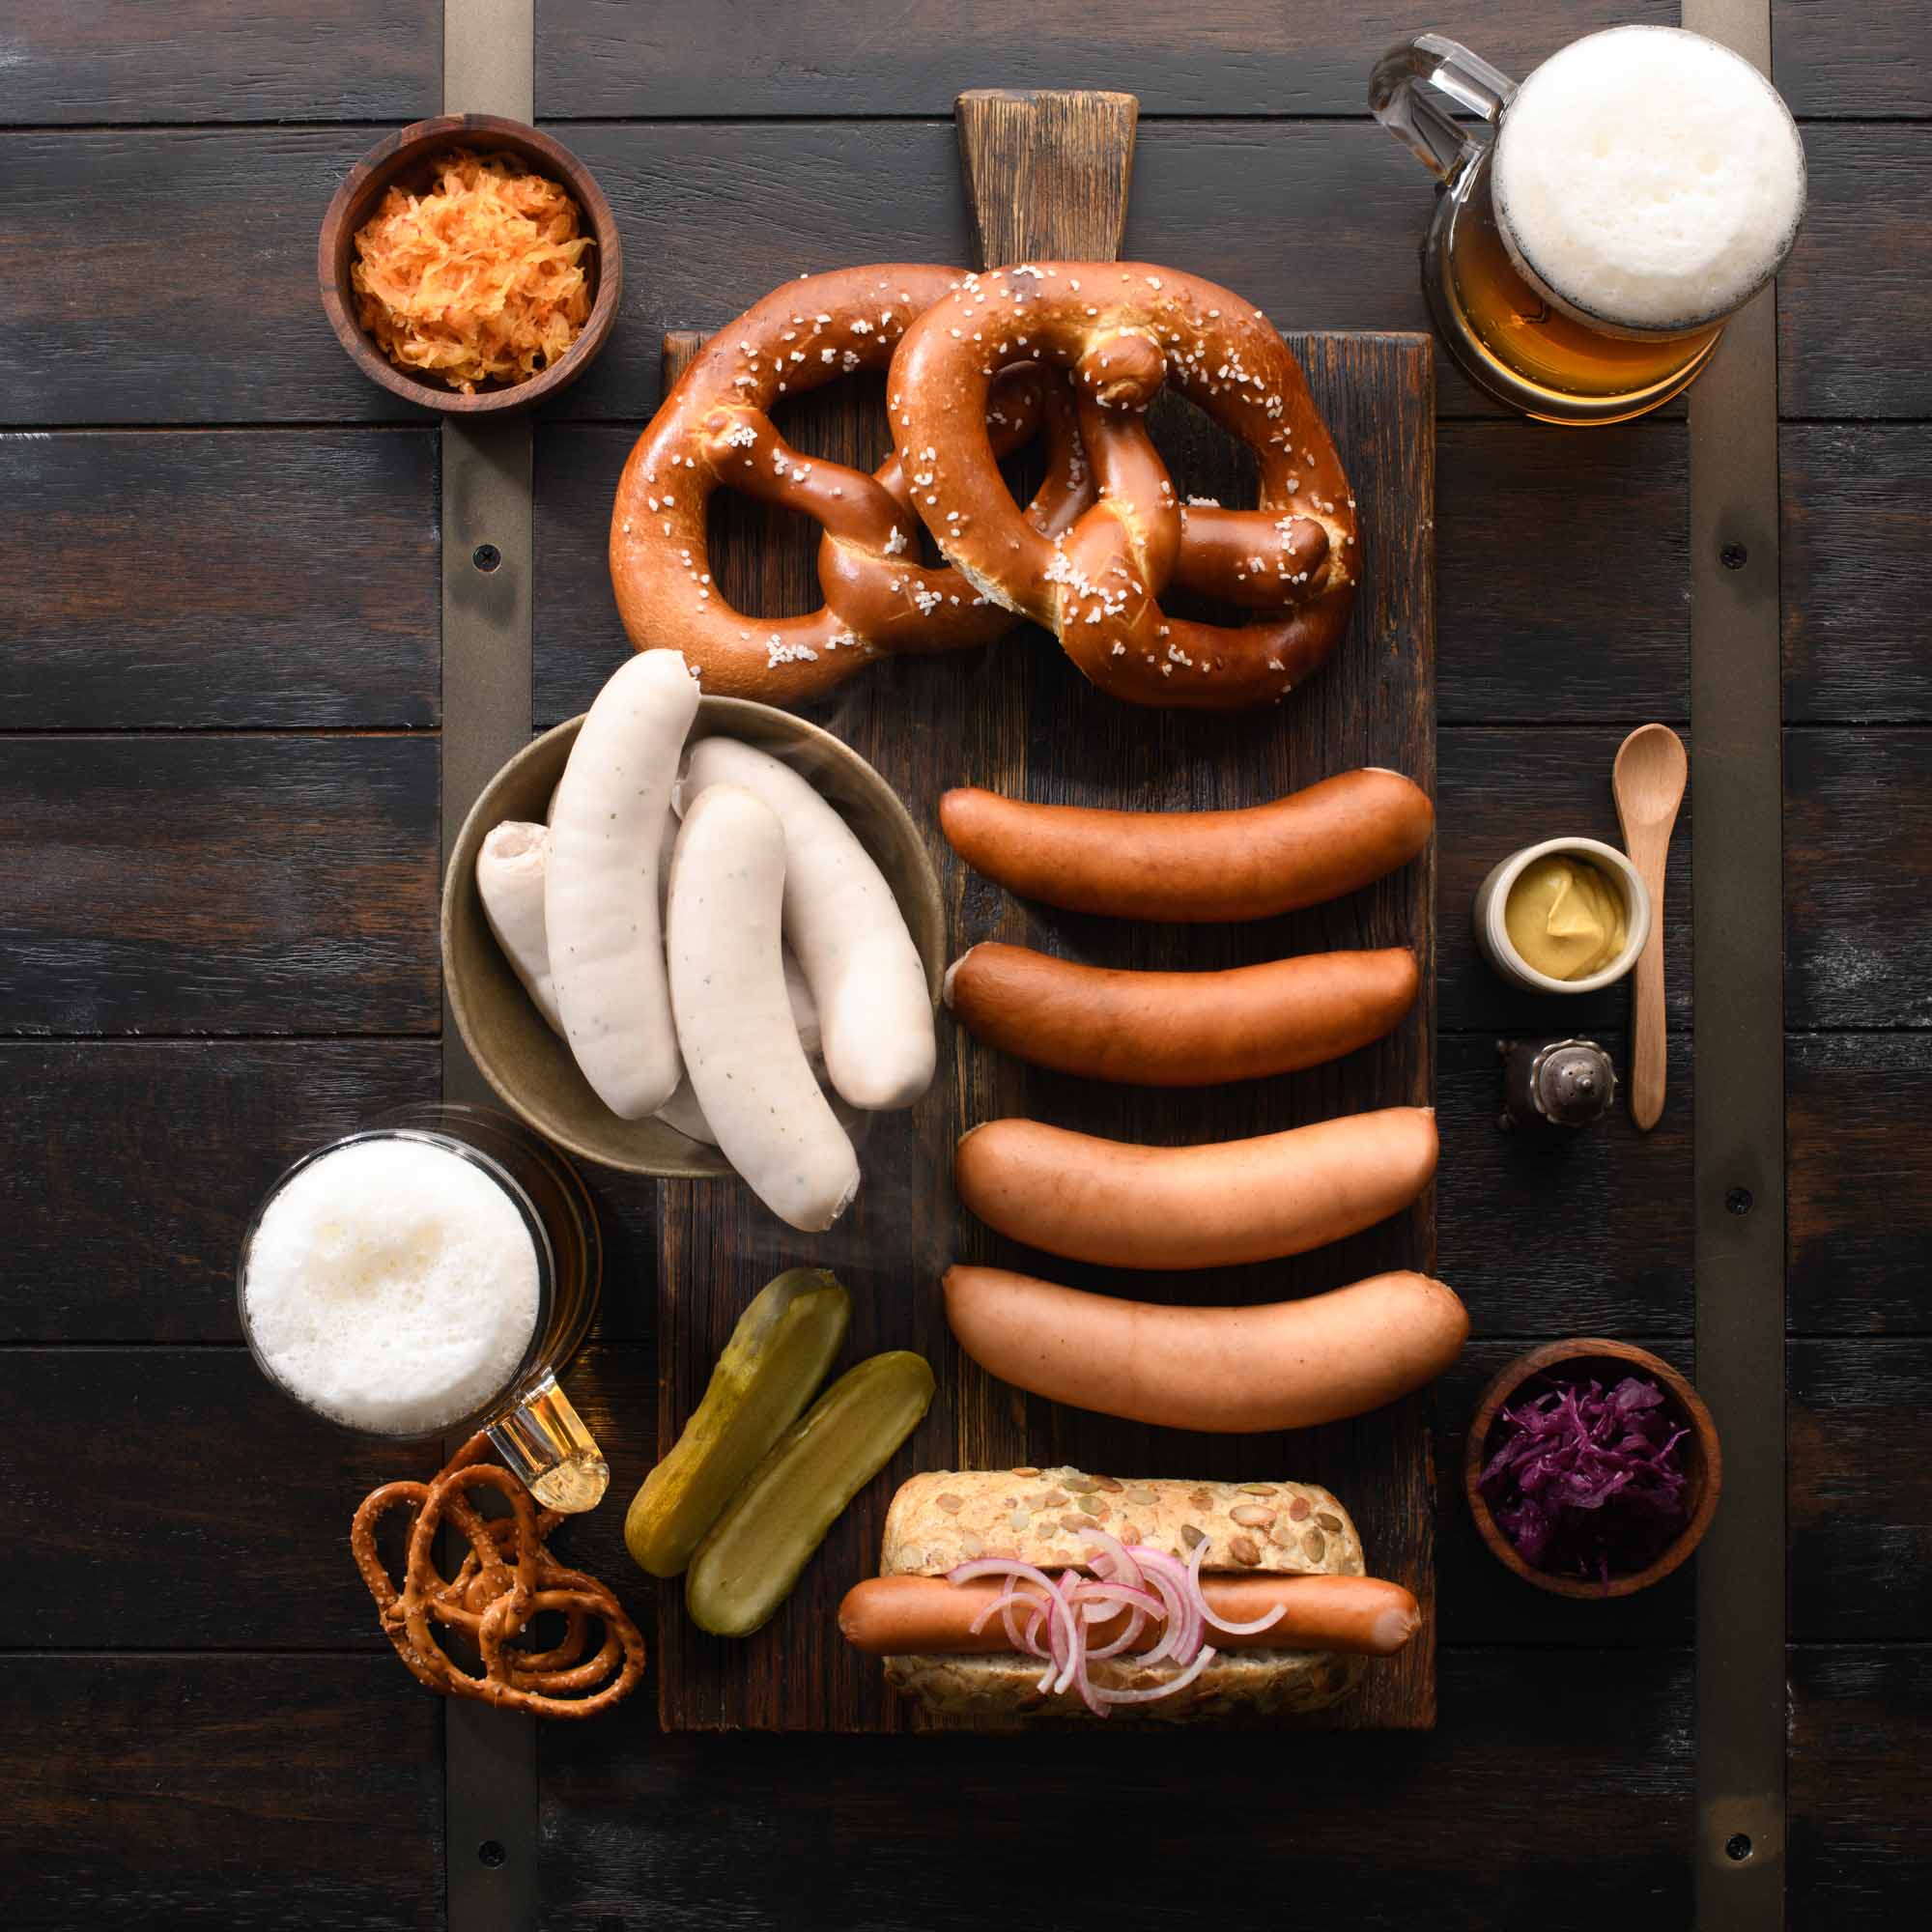 Gotzinger German Sausages on wooden platter with sauerkraut and beer